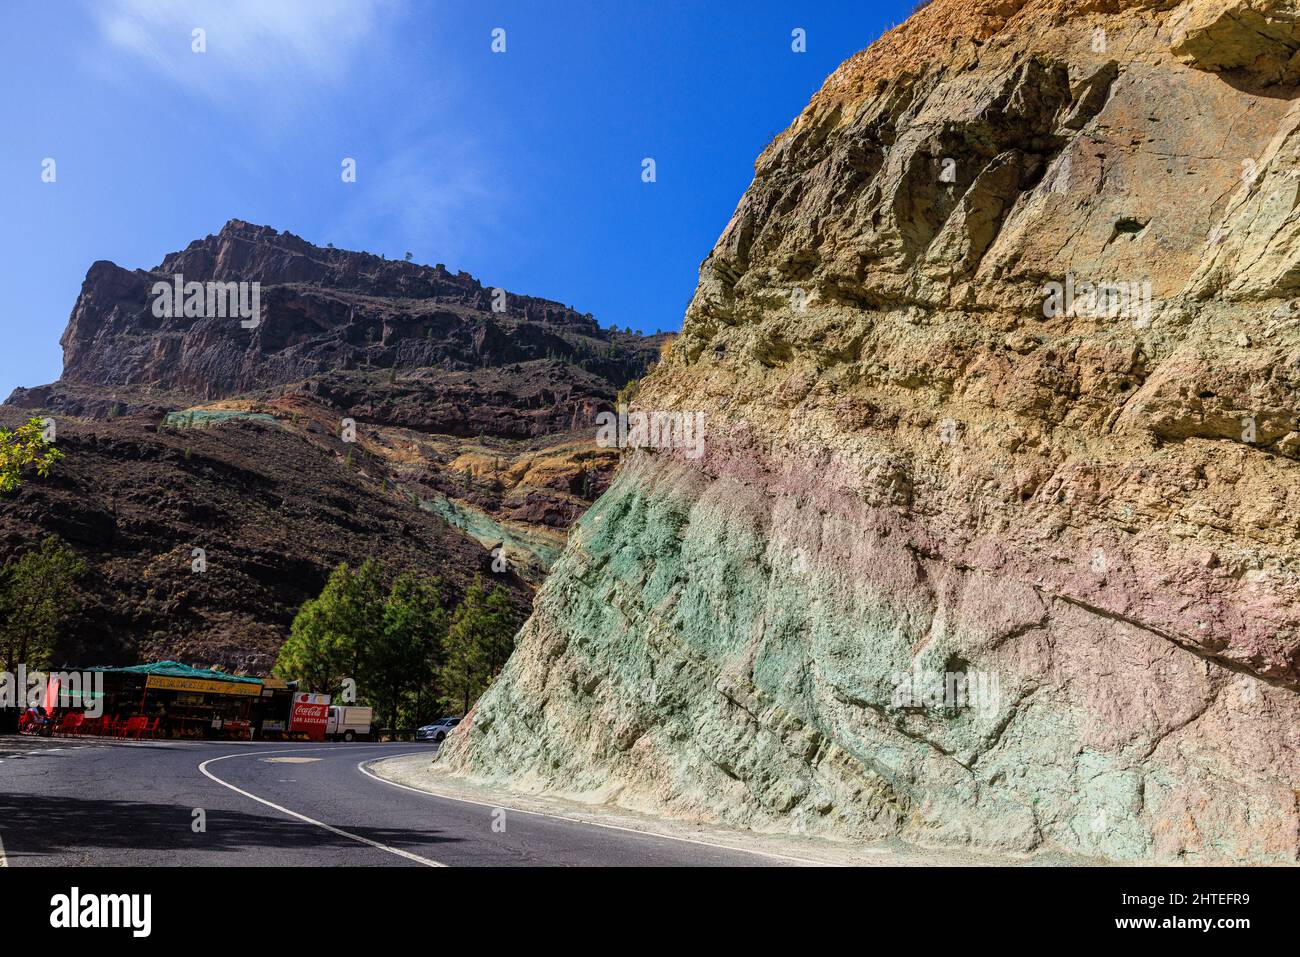 The GC-200 in western Gran Canaria cuts through the colourful rock formations of los azulejos de veneguera Stock Photo